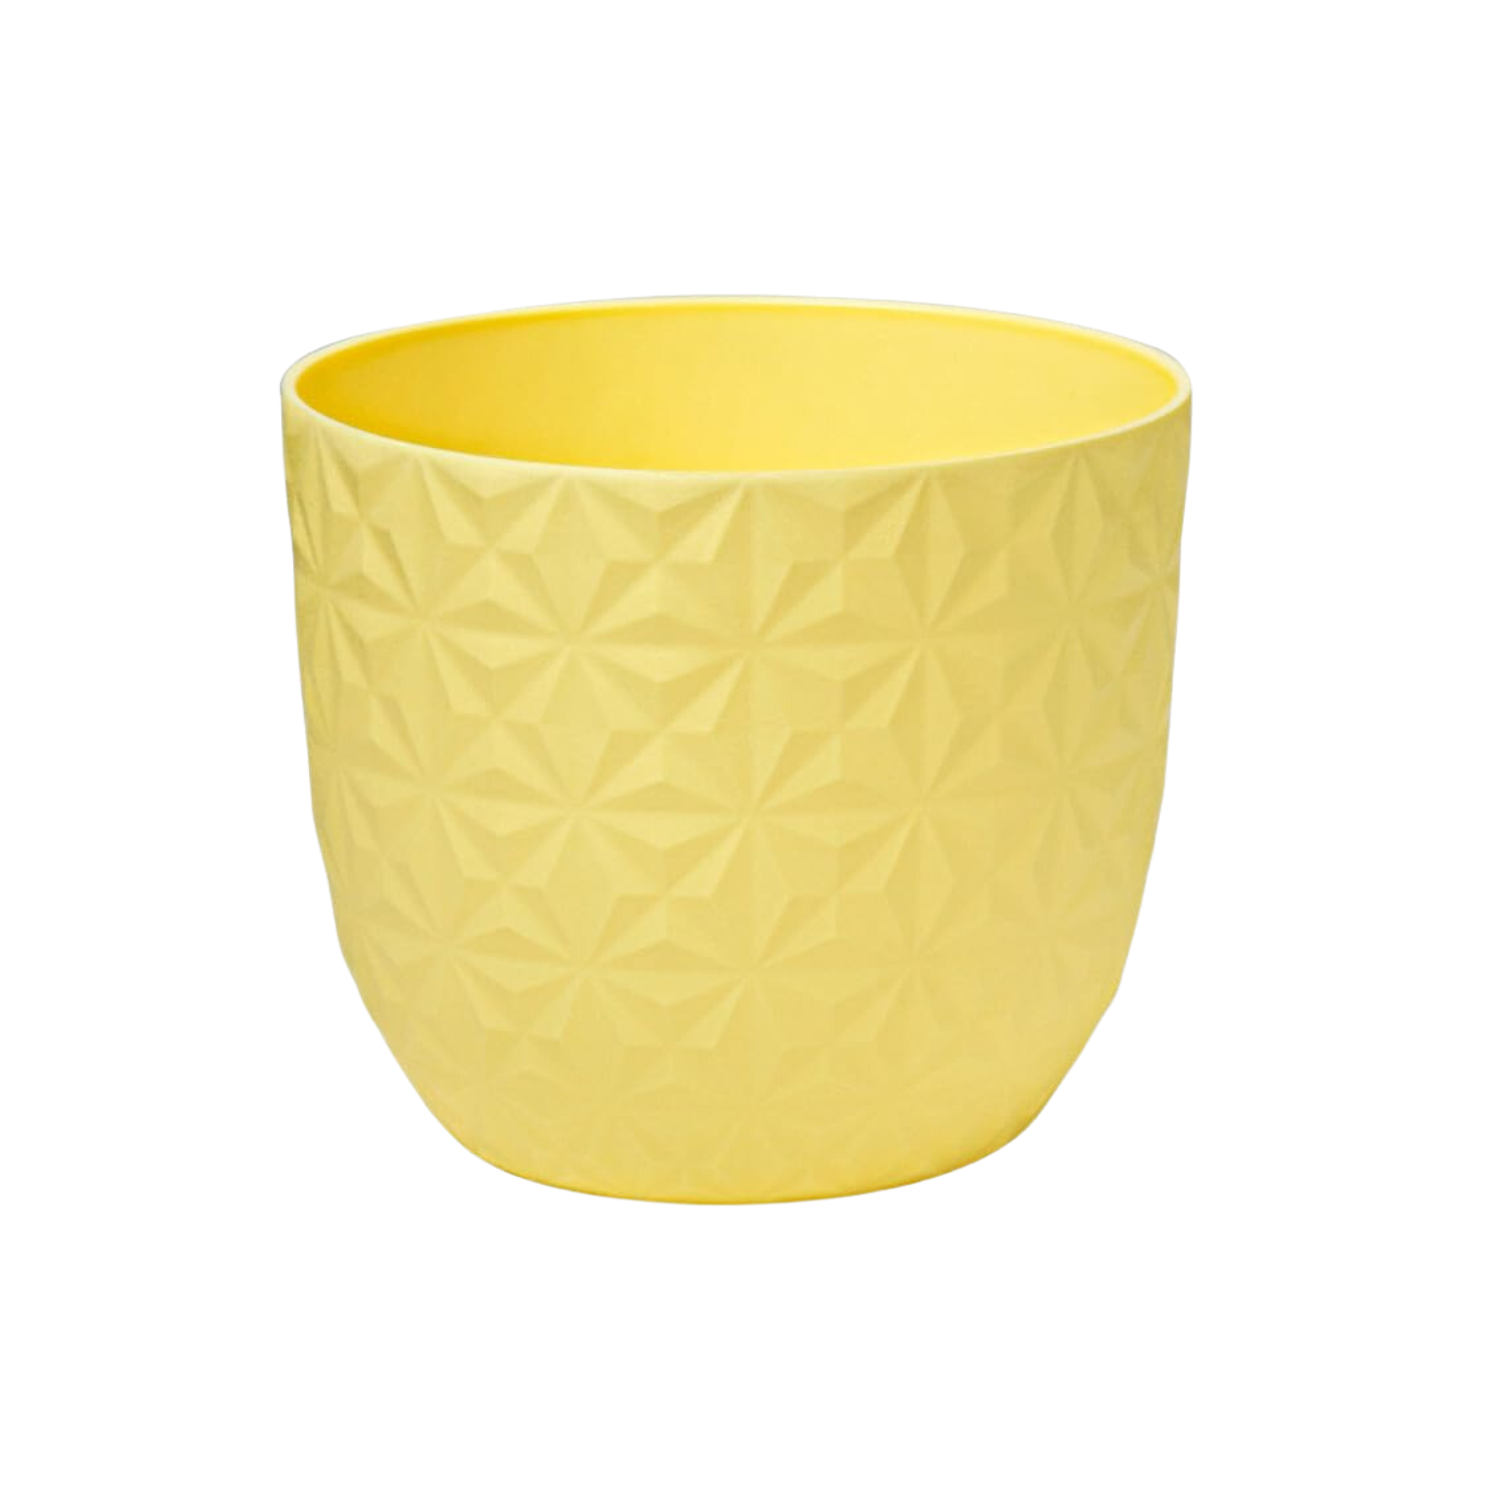 Verona Diamond Planter 14cm Round Plastic Pot For Home & Garden (14CM | 5.5INCH)